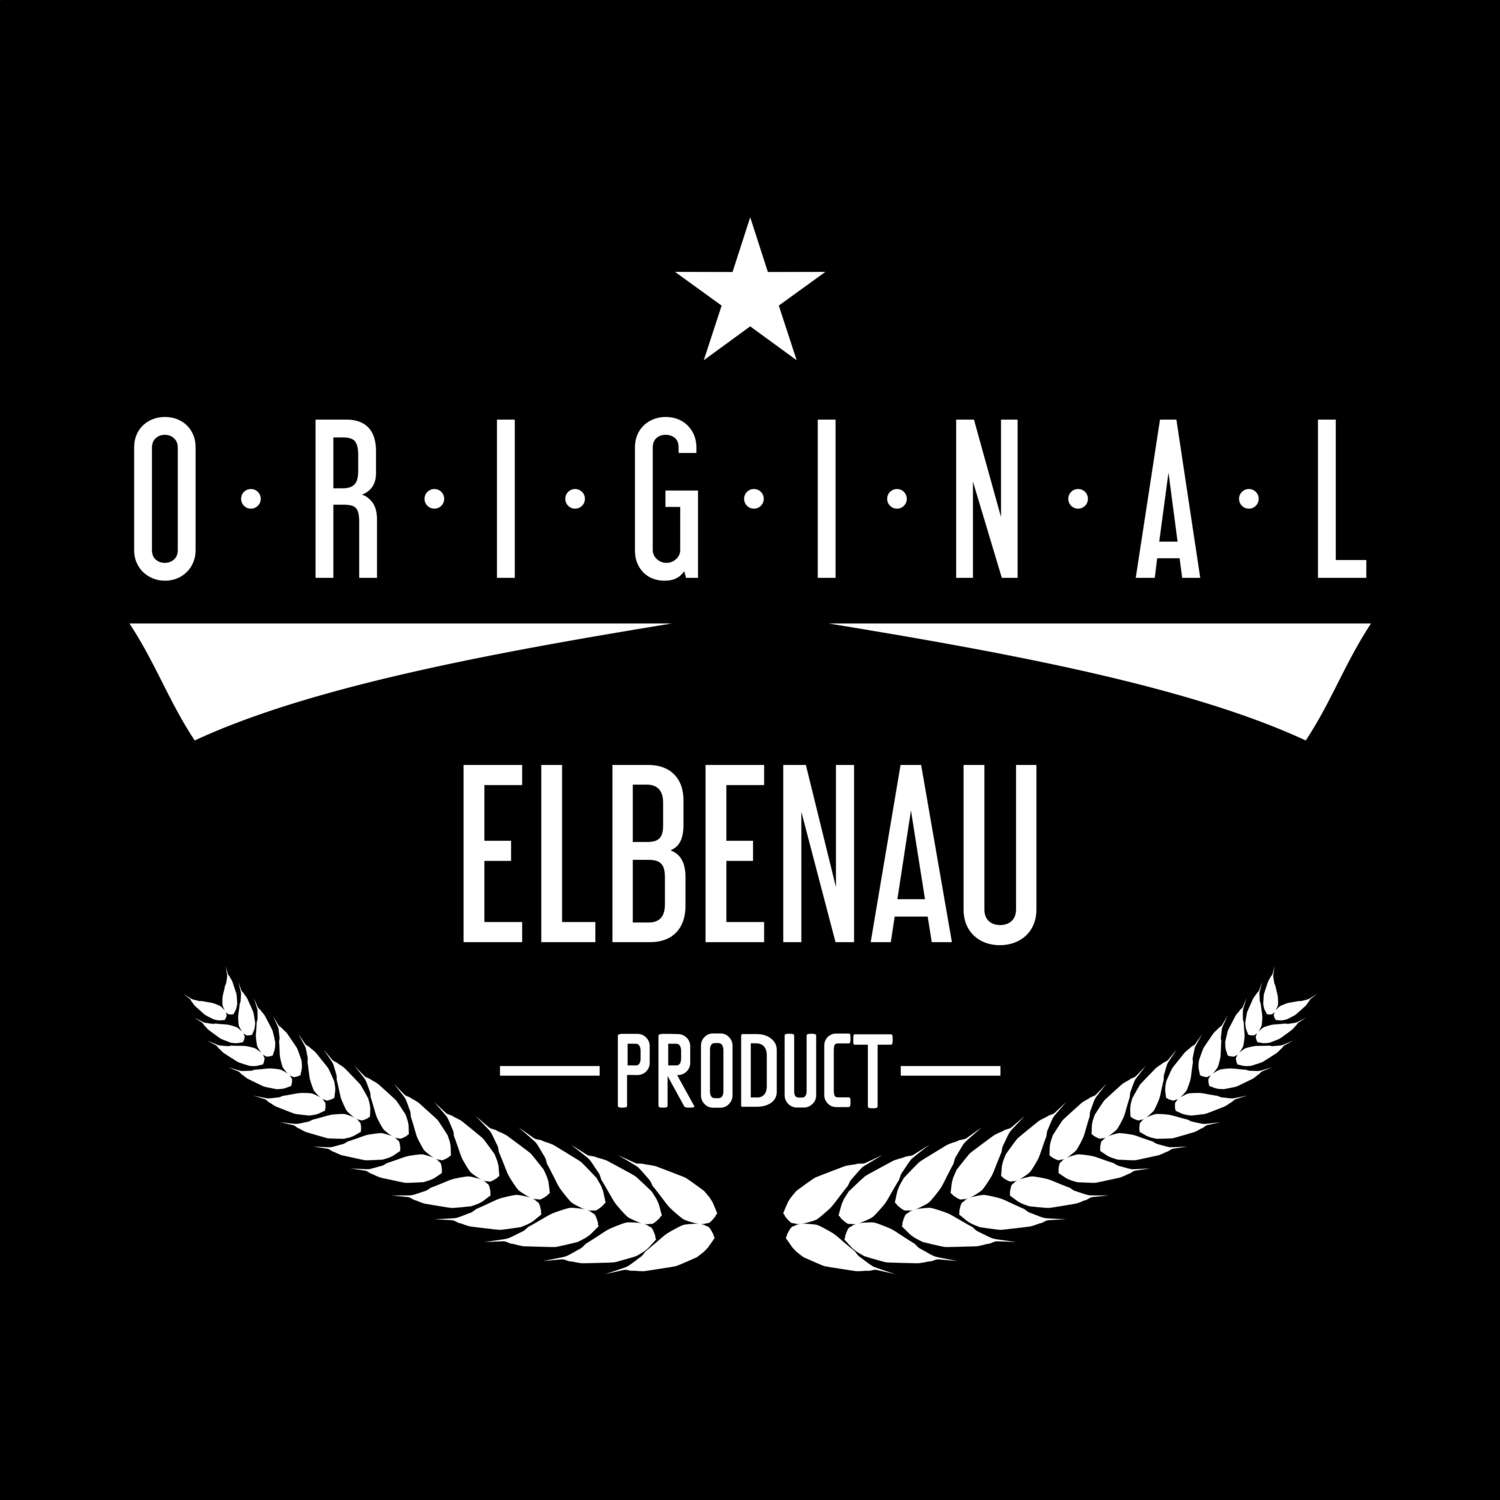 Elbenau T-Shirt »Original Product«